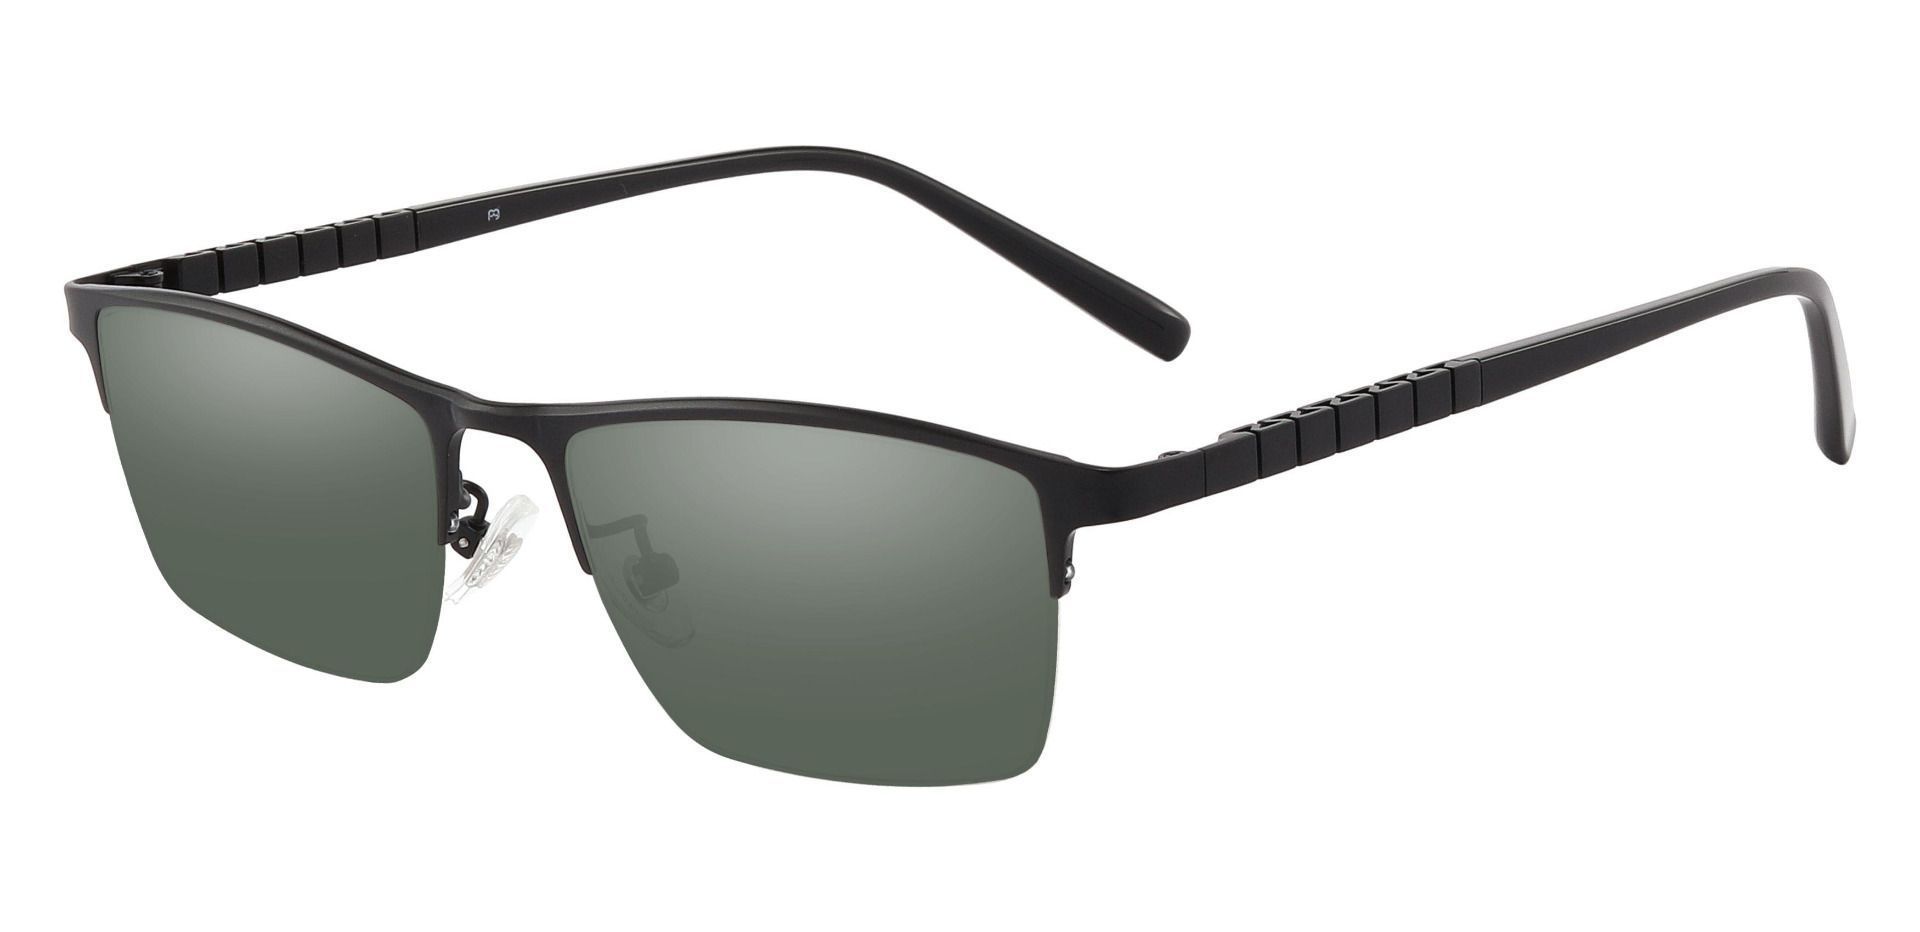 Maine Rectangle Prescription Sunglasses - Black Frame With Green Lenses